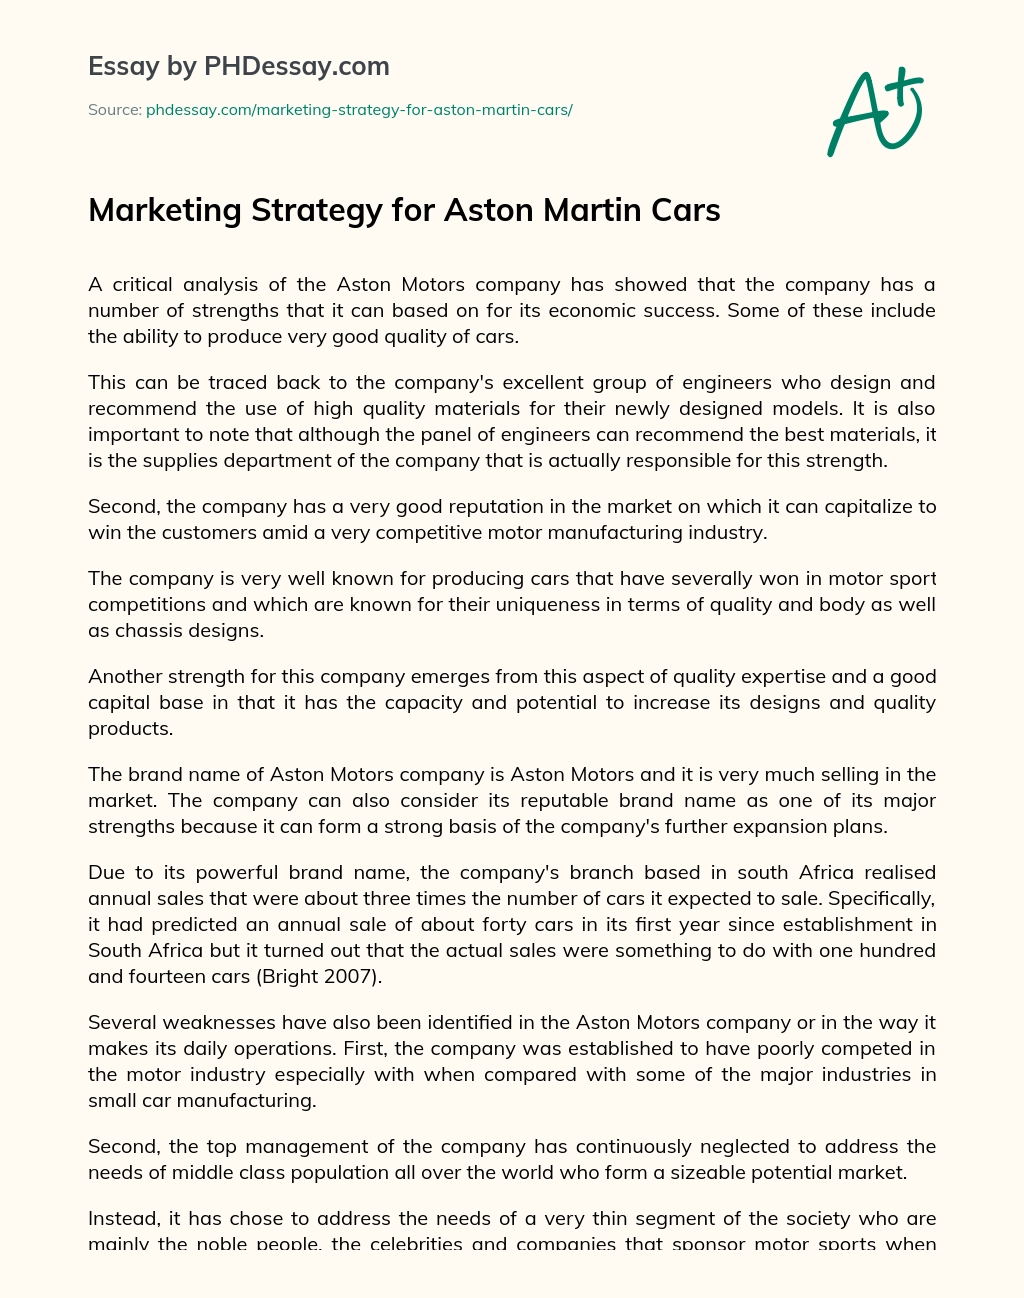 Marketing Strategy for Aston Martin Cars essay